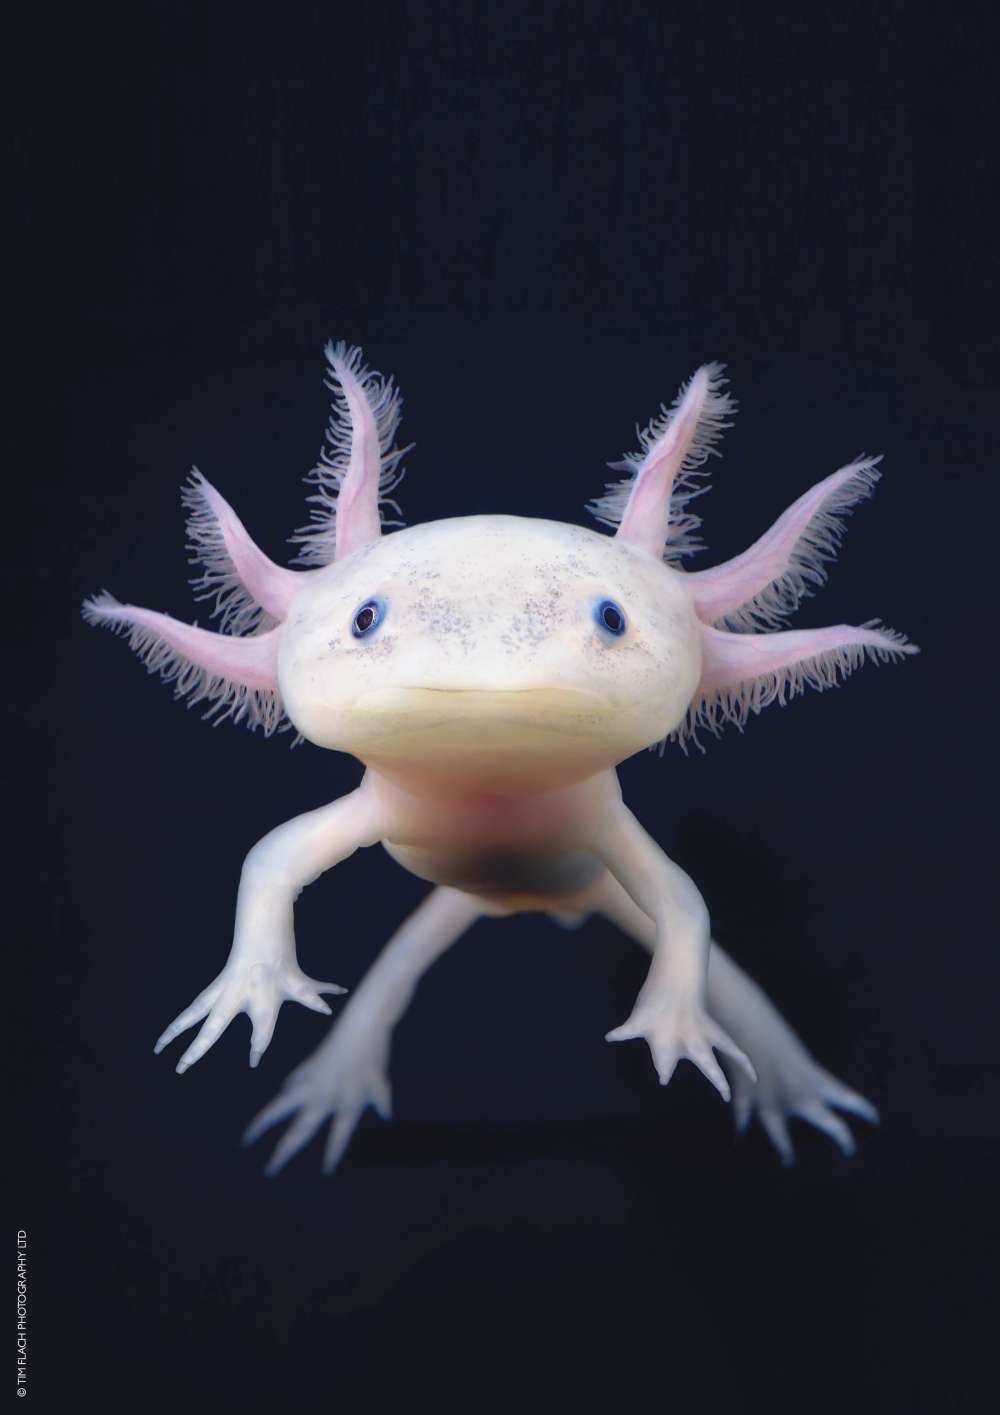 Axolotl: an amazing amphibian